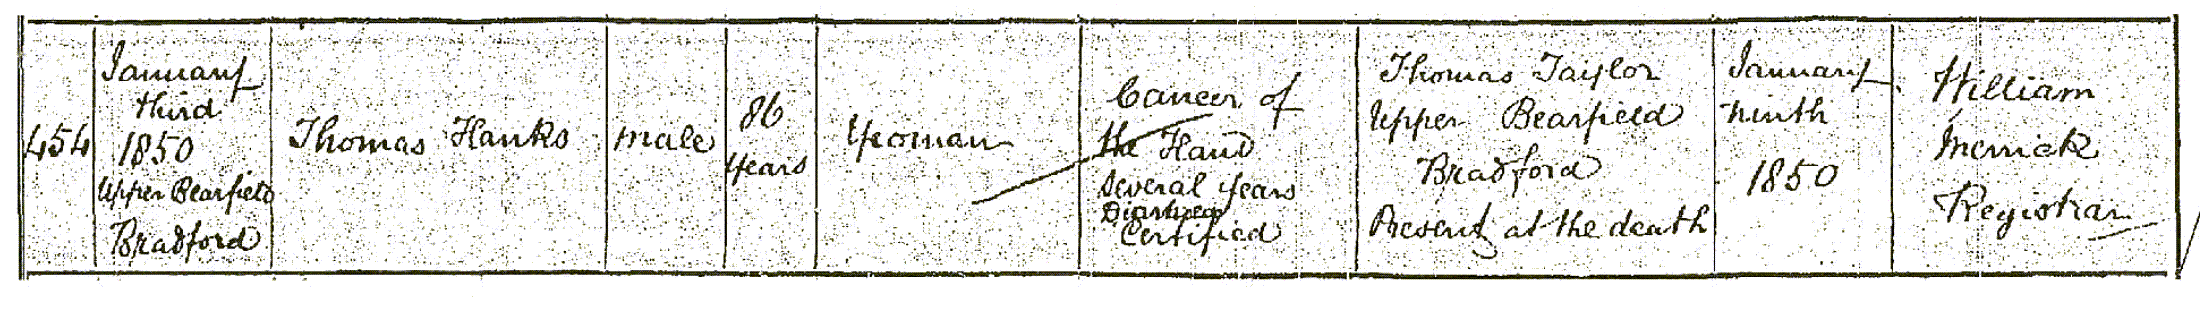 Figure 5: Death Certificate for Thomas Hanks